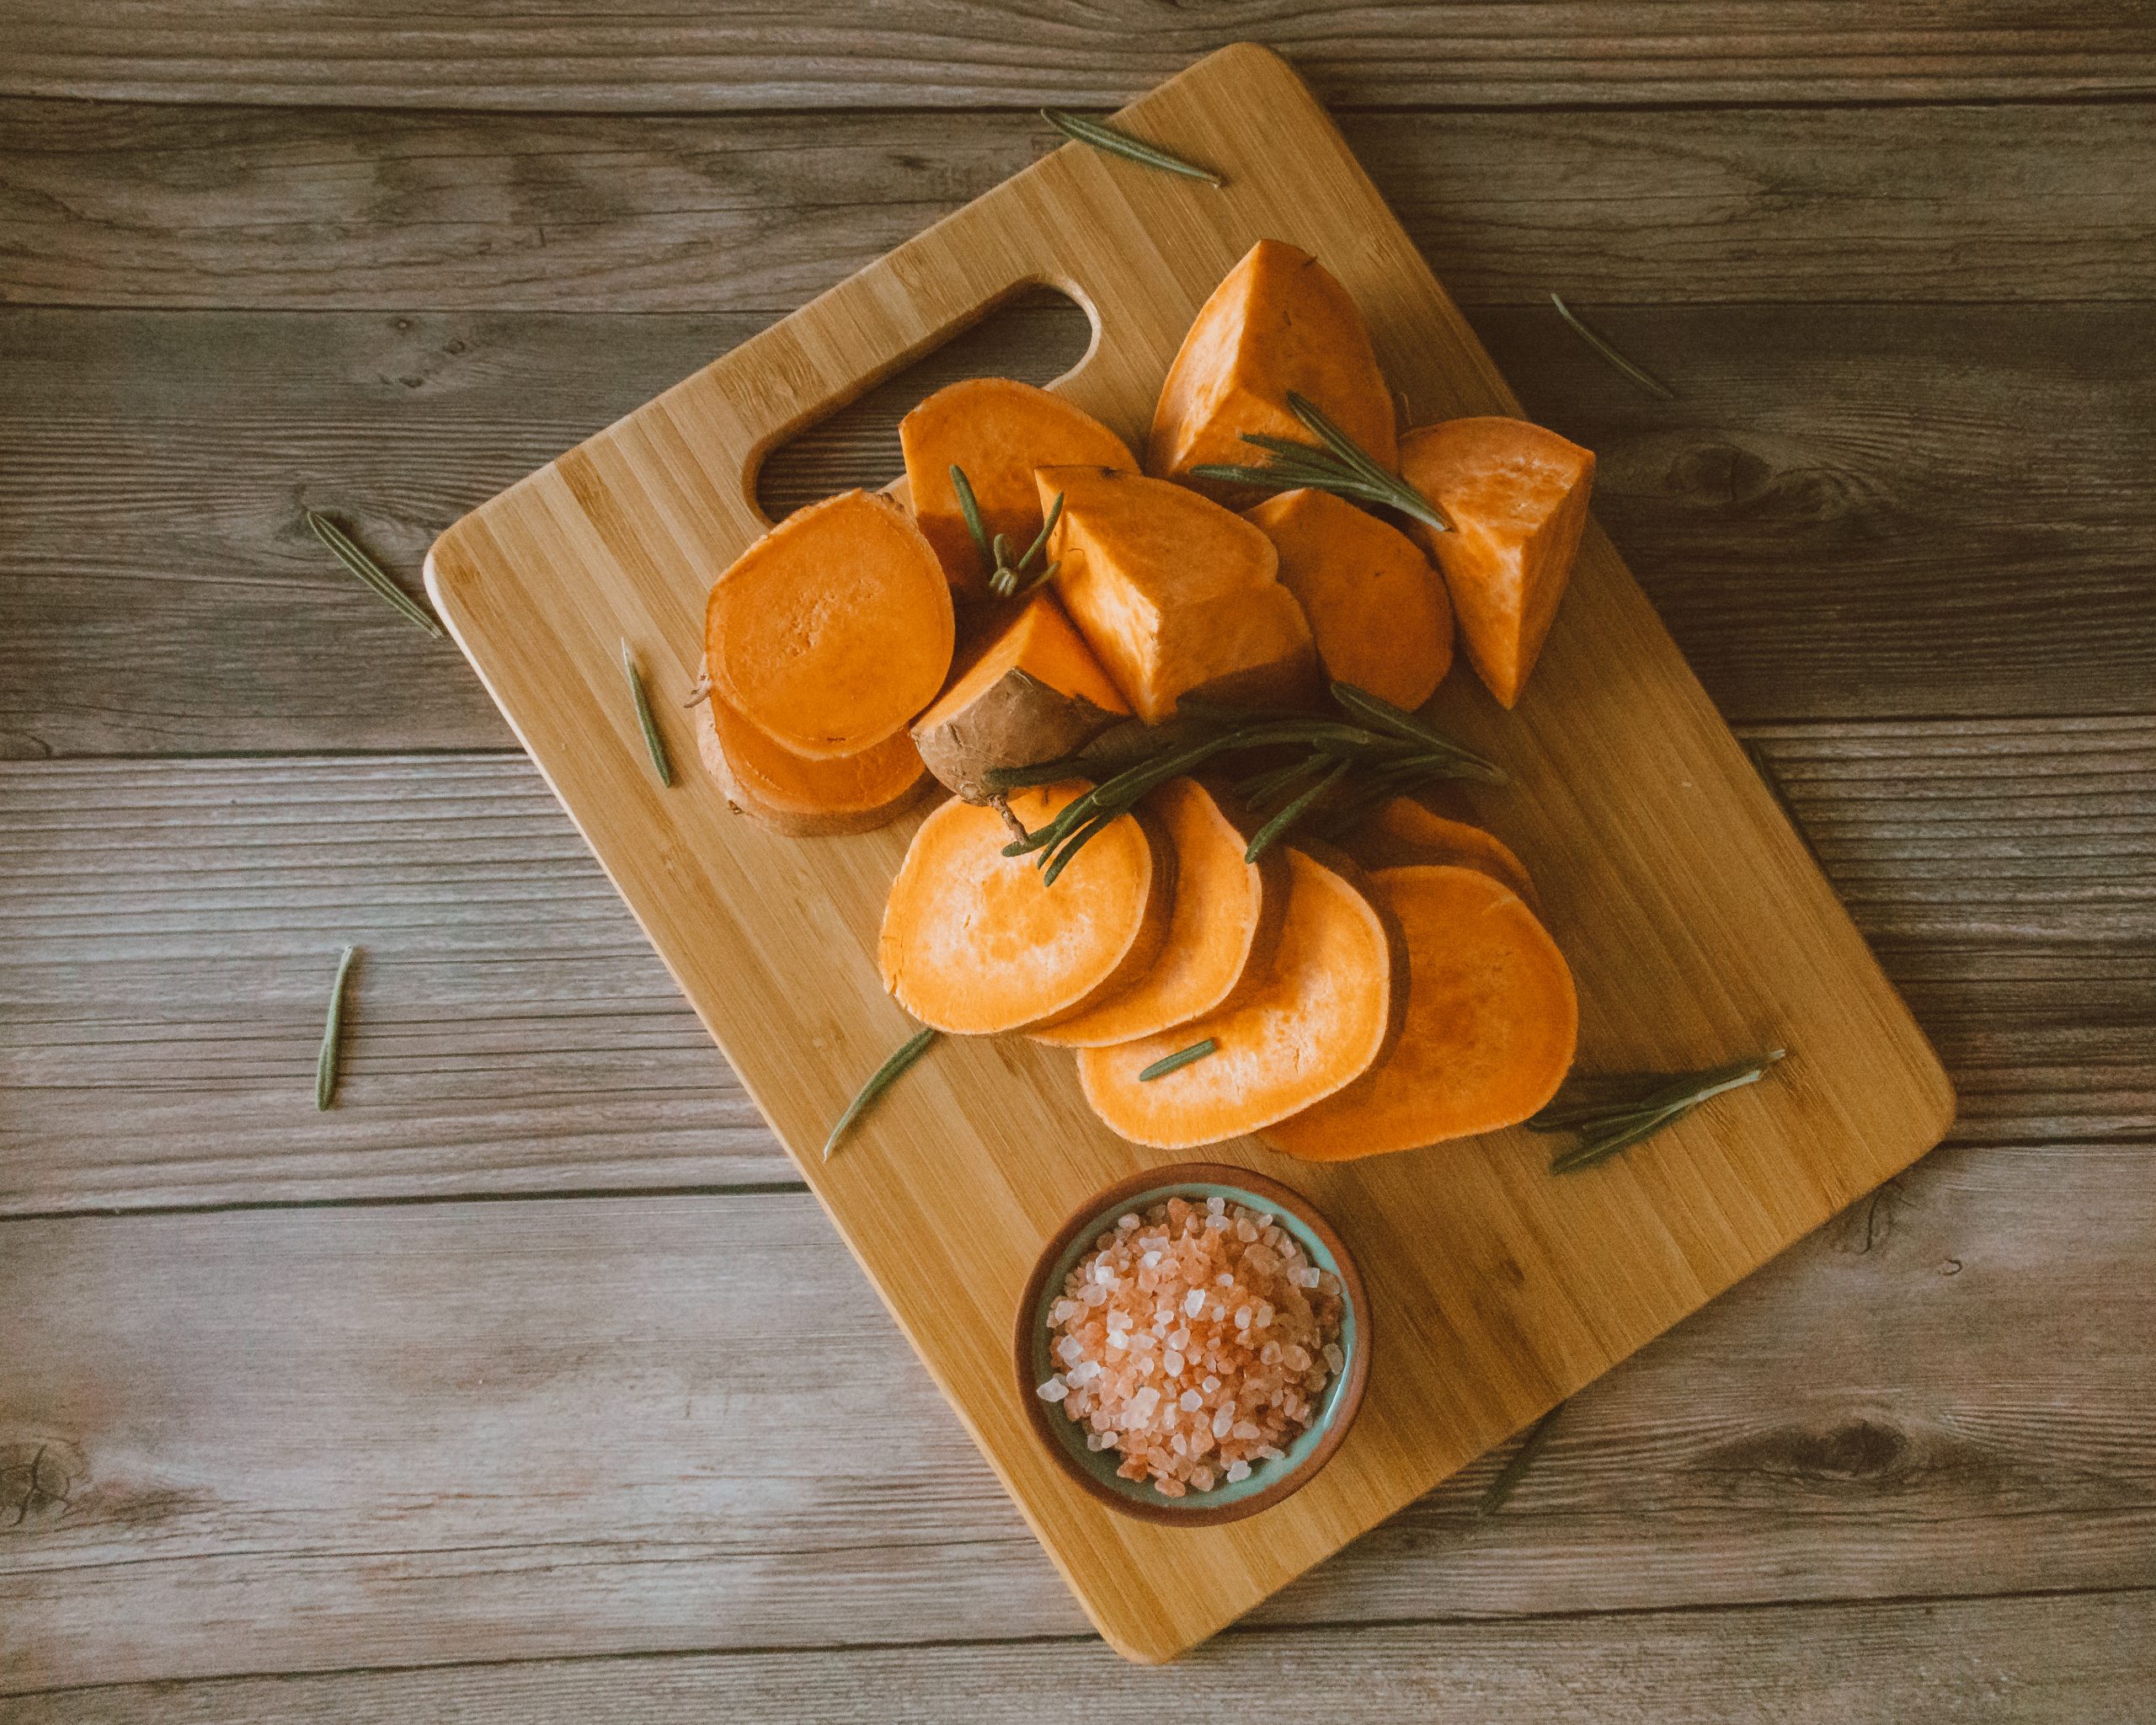 Chopped pumpkins on kitchen board